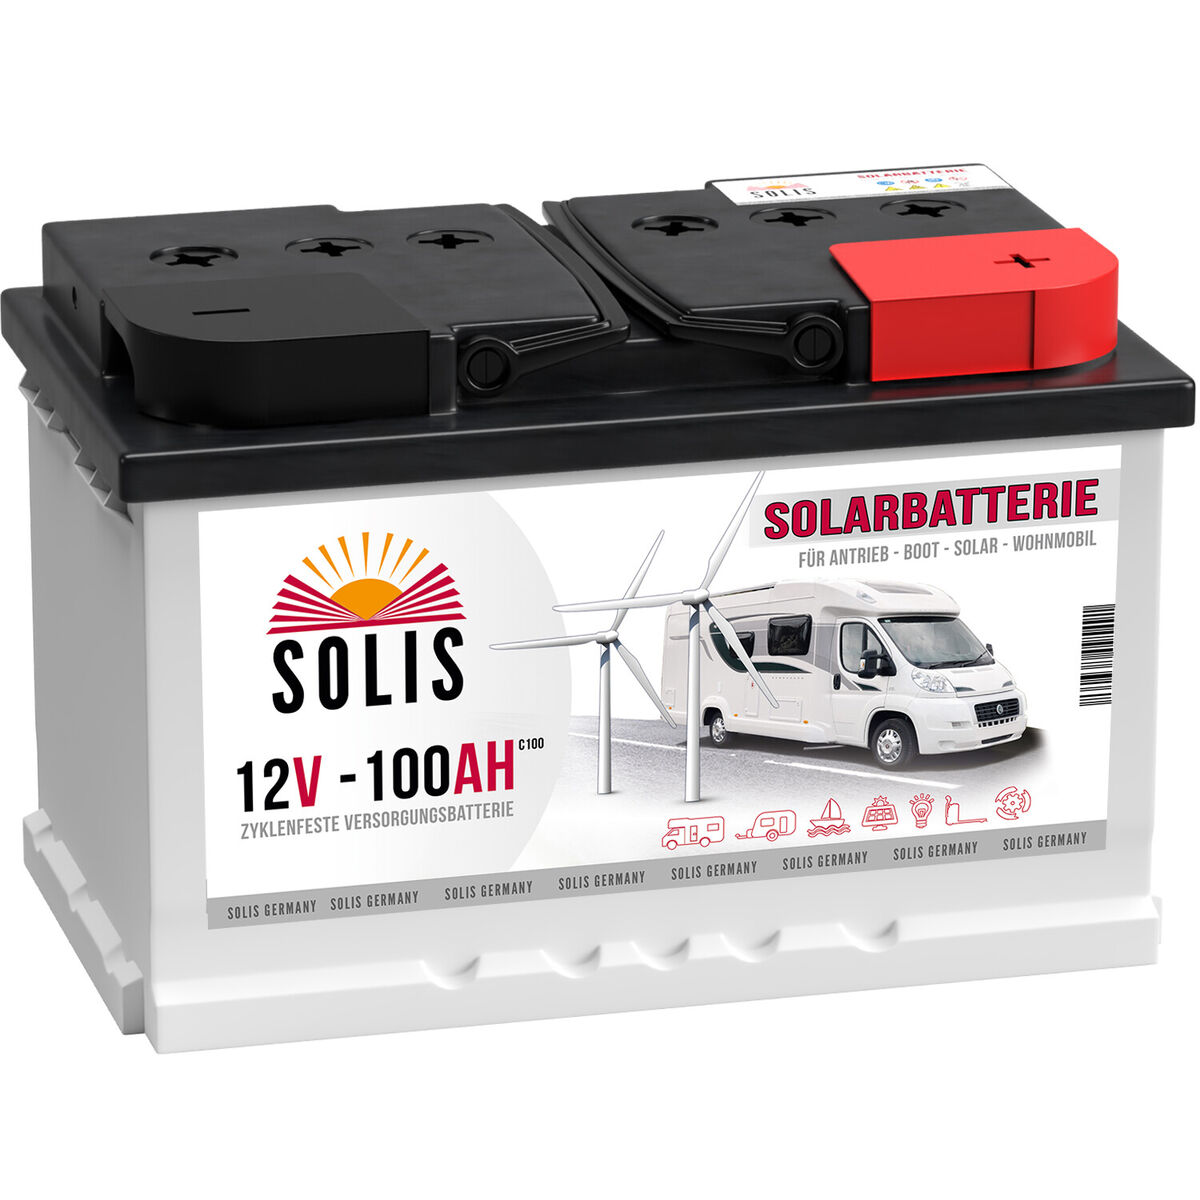 Solarbatterie 100AH 12V Boot Wohnmobil Caravan Versorgungs Mover